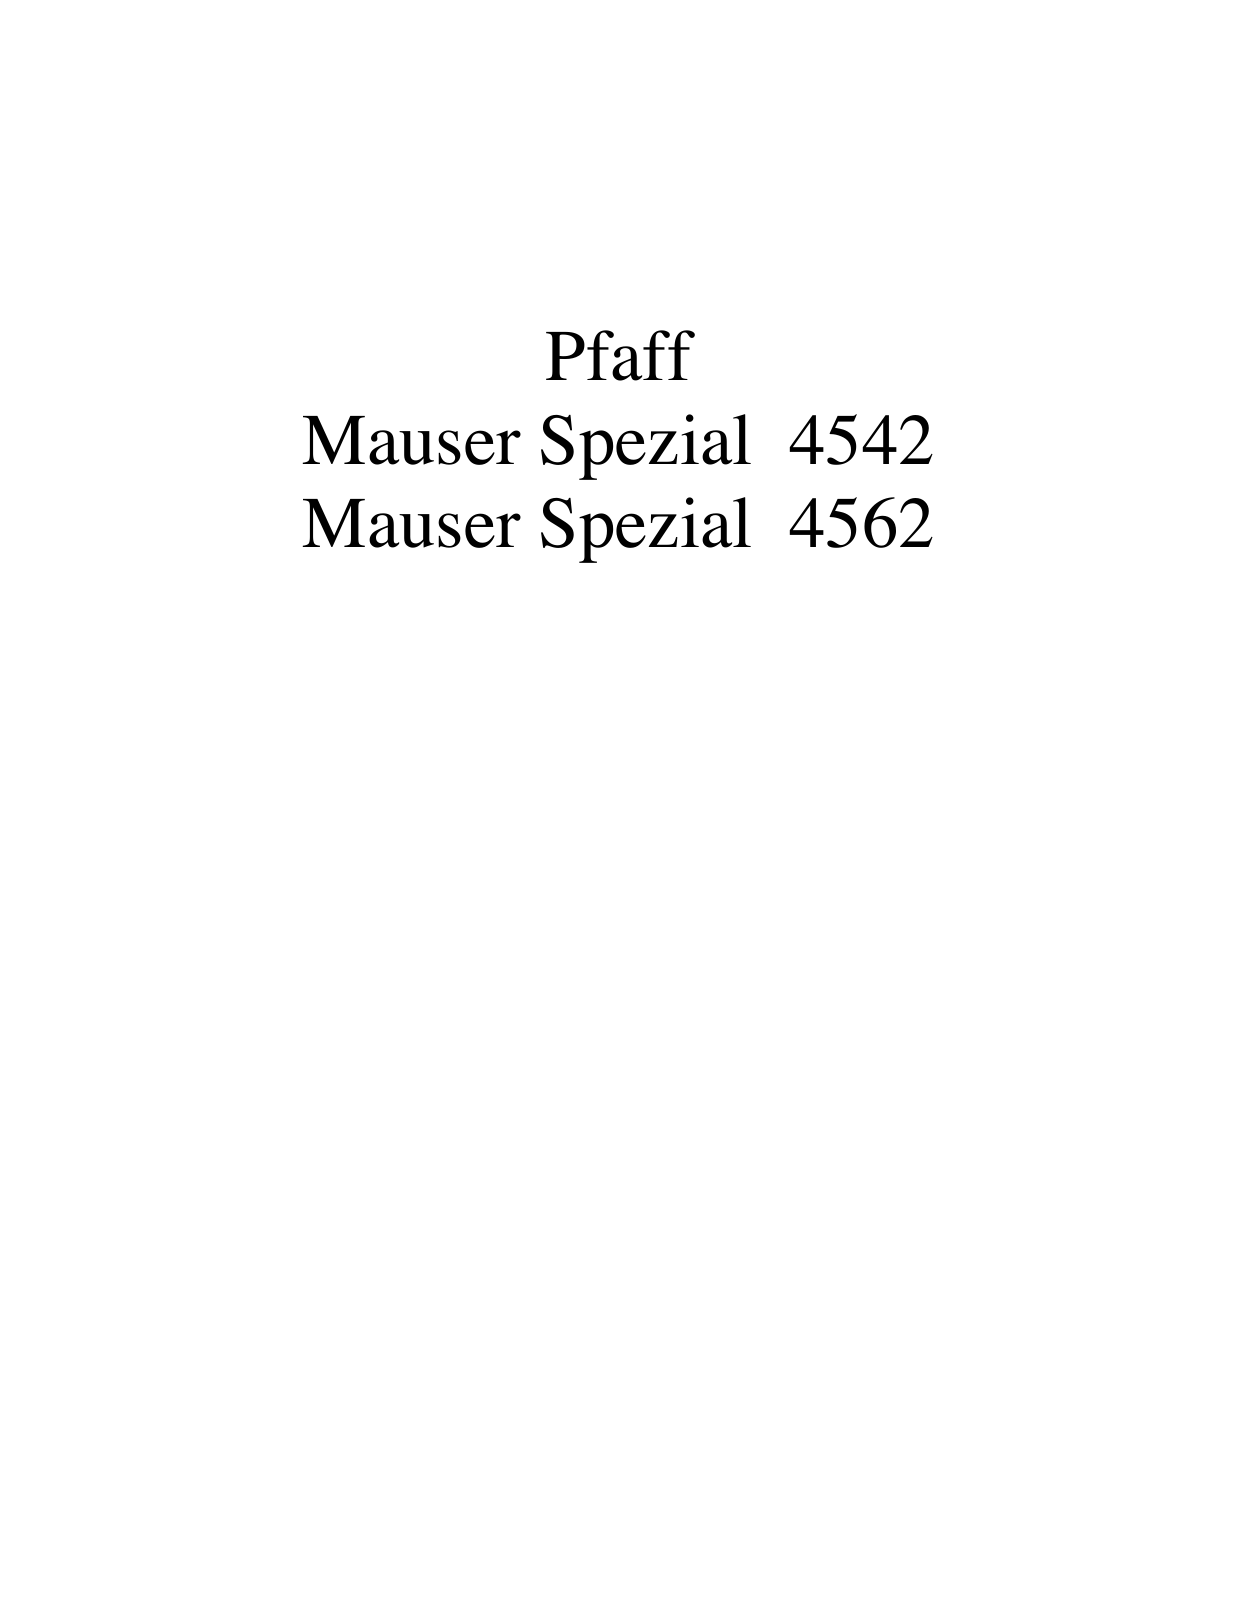 PFAFF Mauser Spezial 4542, Mauser Spezial 4562 Parts List